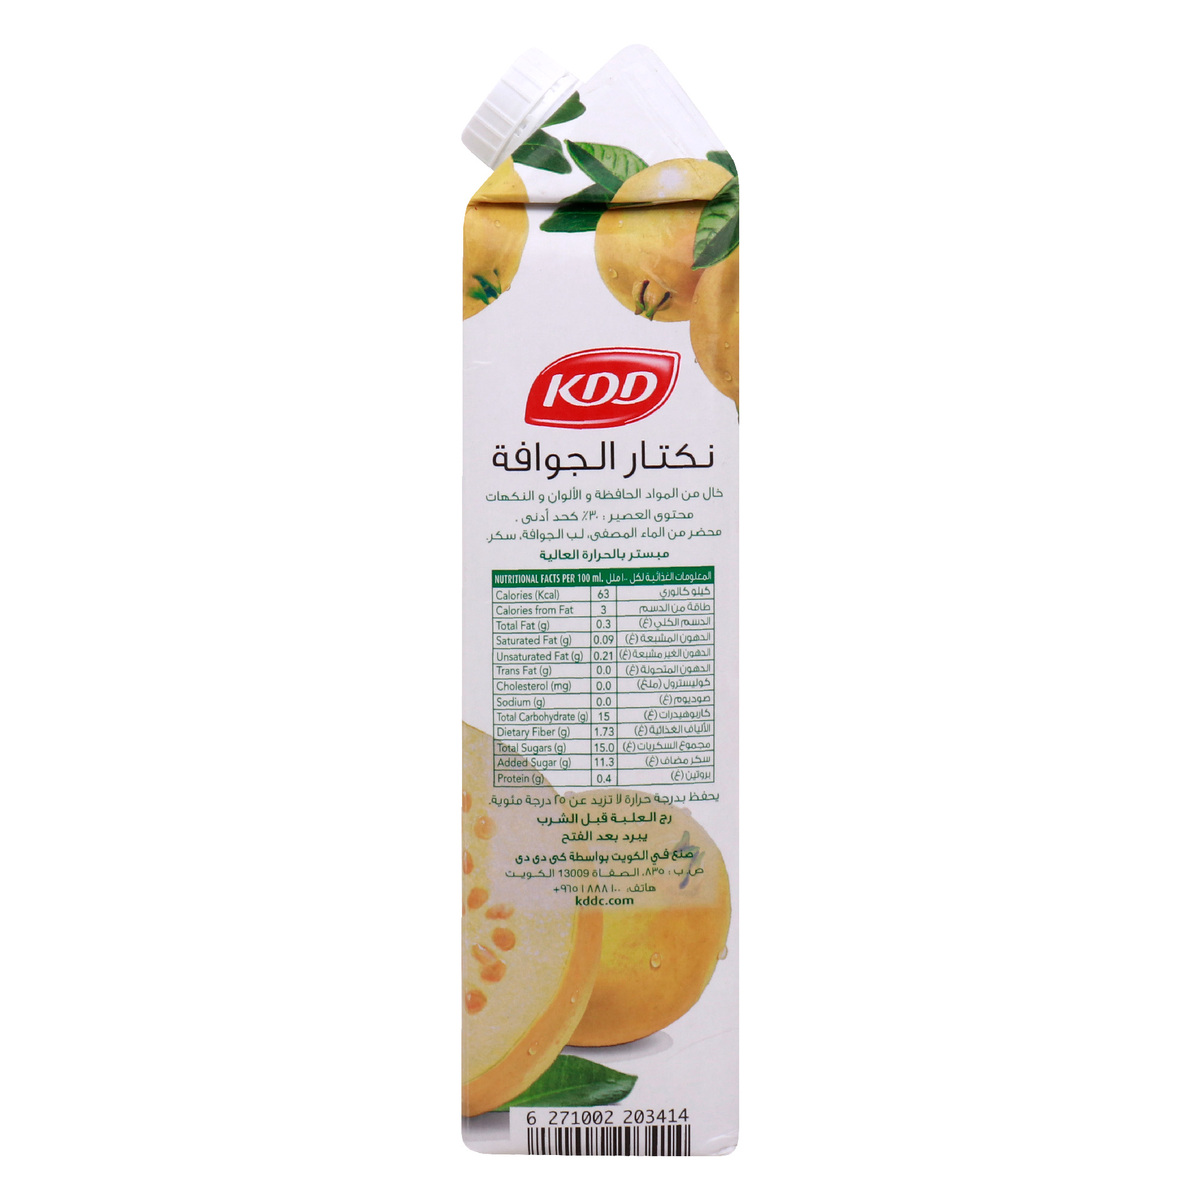 KDD Guava Nectar Drink 1 Litre